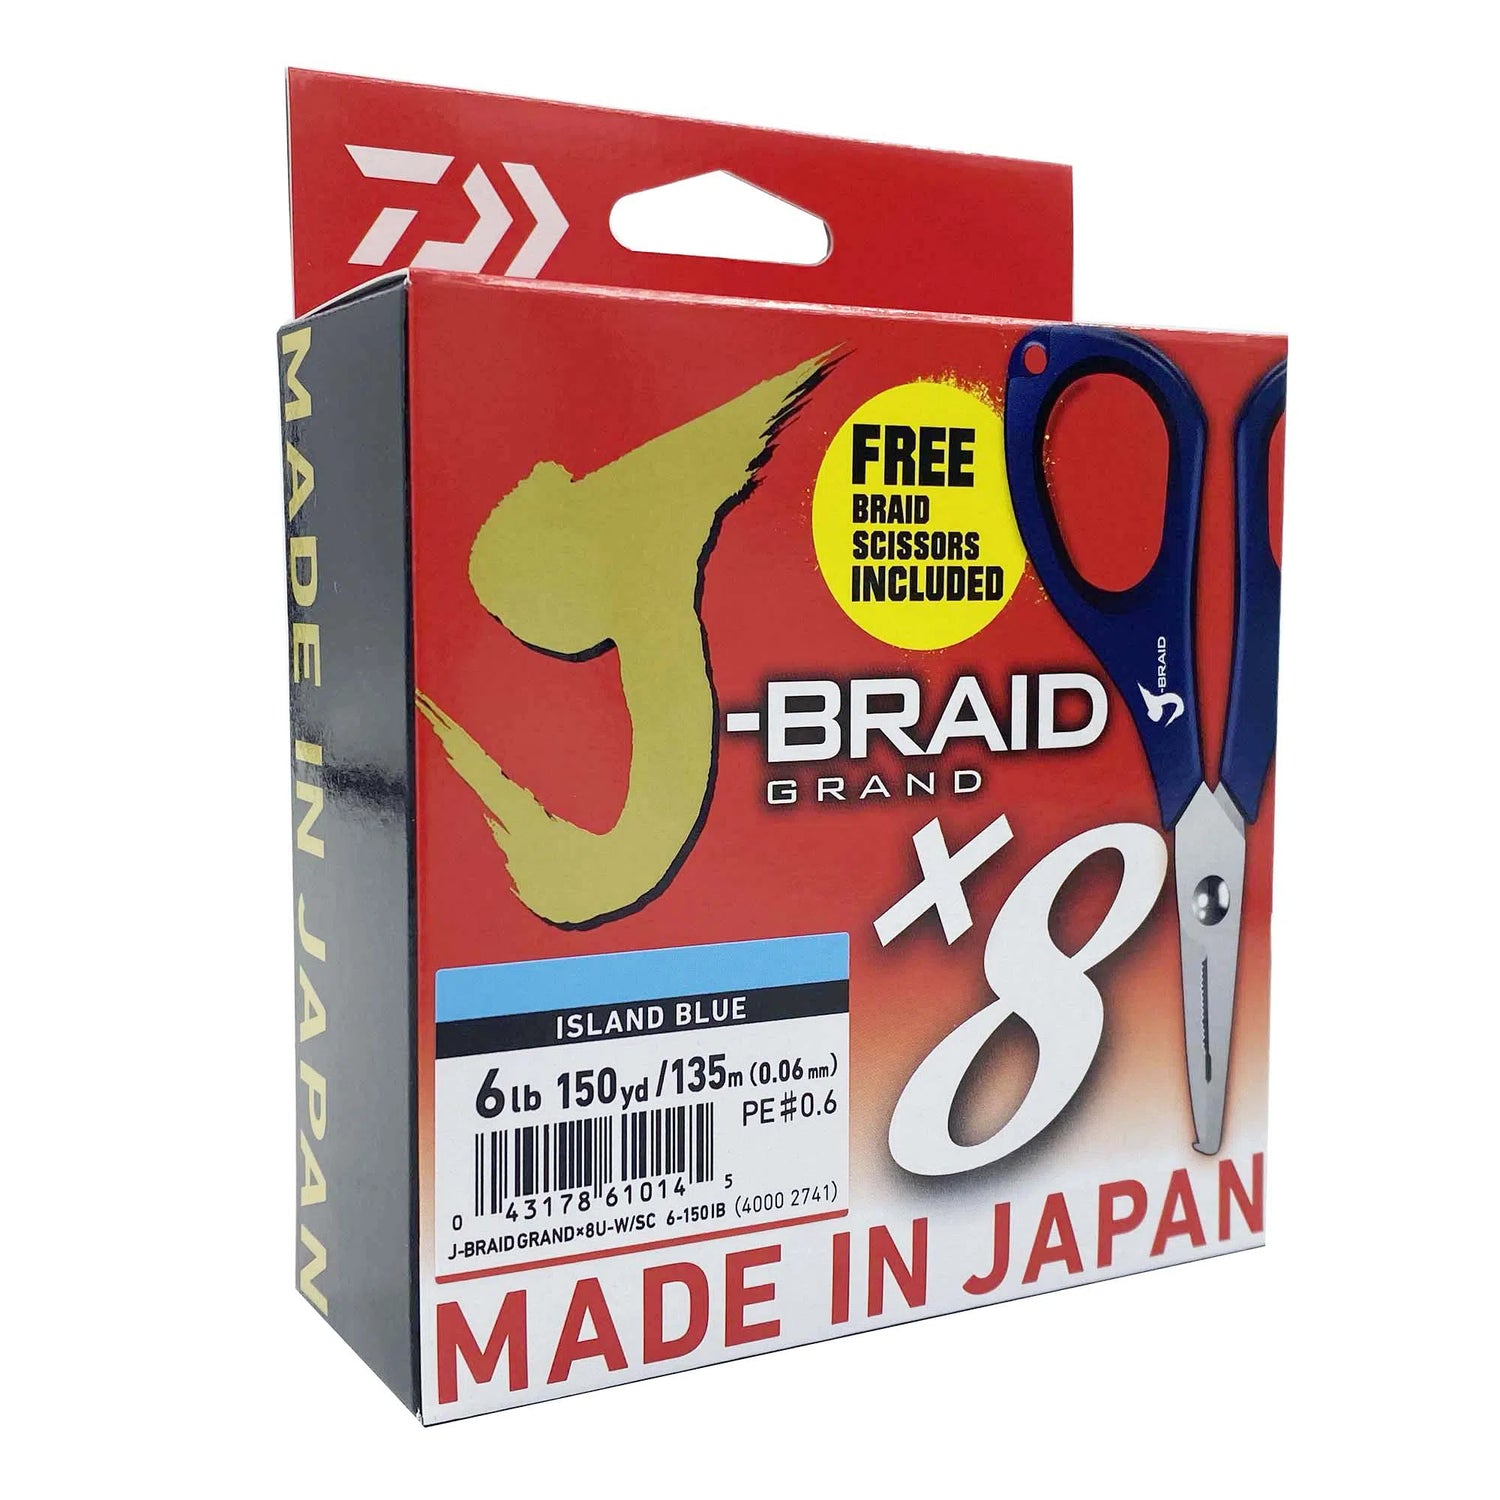 8 Strand Braid China Trade,Buy China Direct From 8 Strand Braid Factories  at